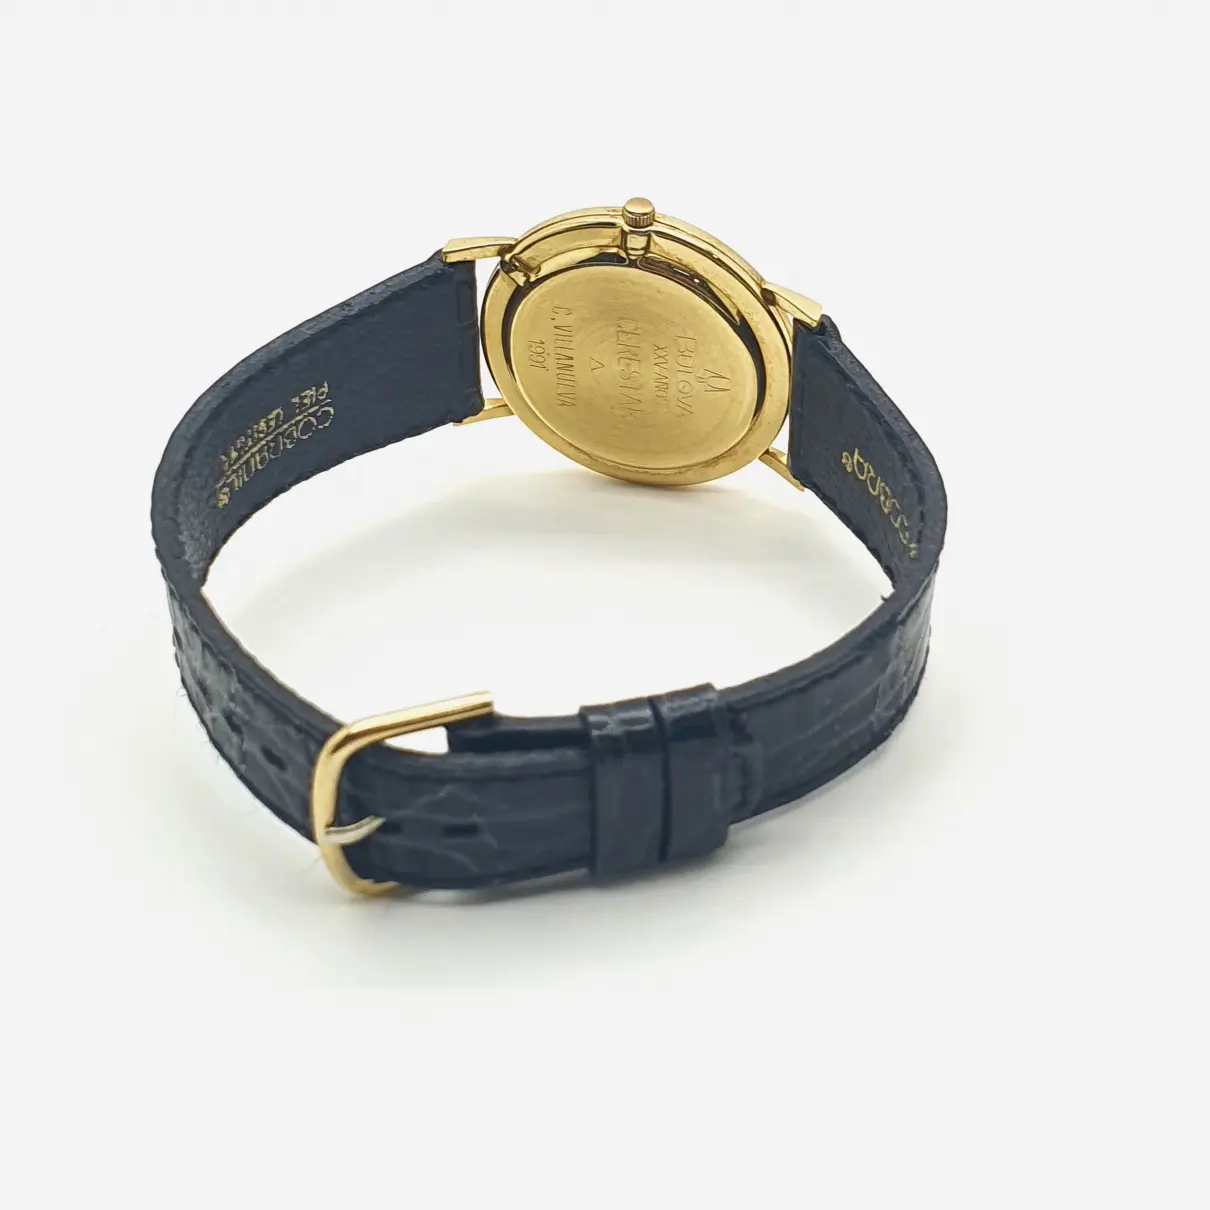 Buy Bulova Yellow gold watch online